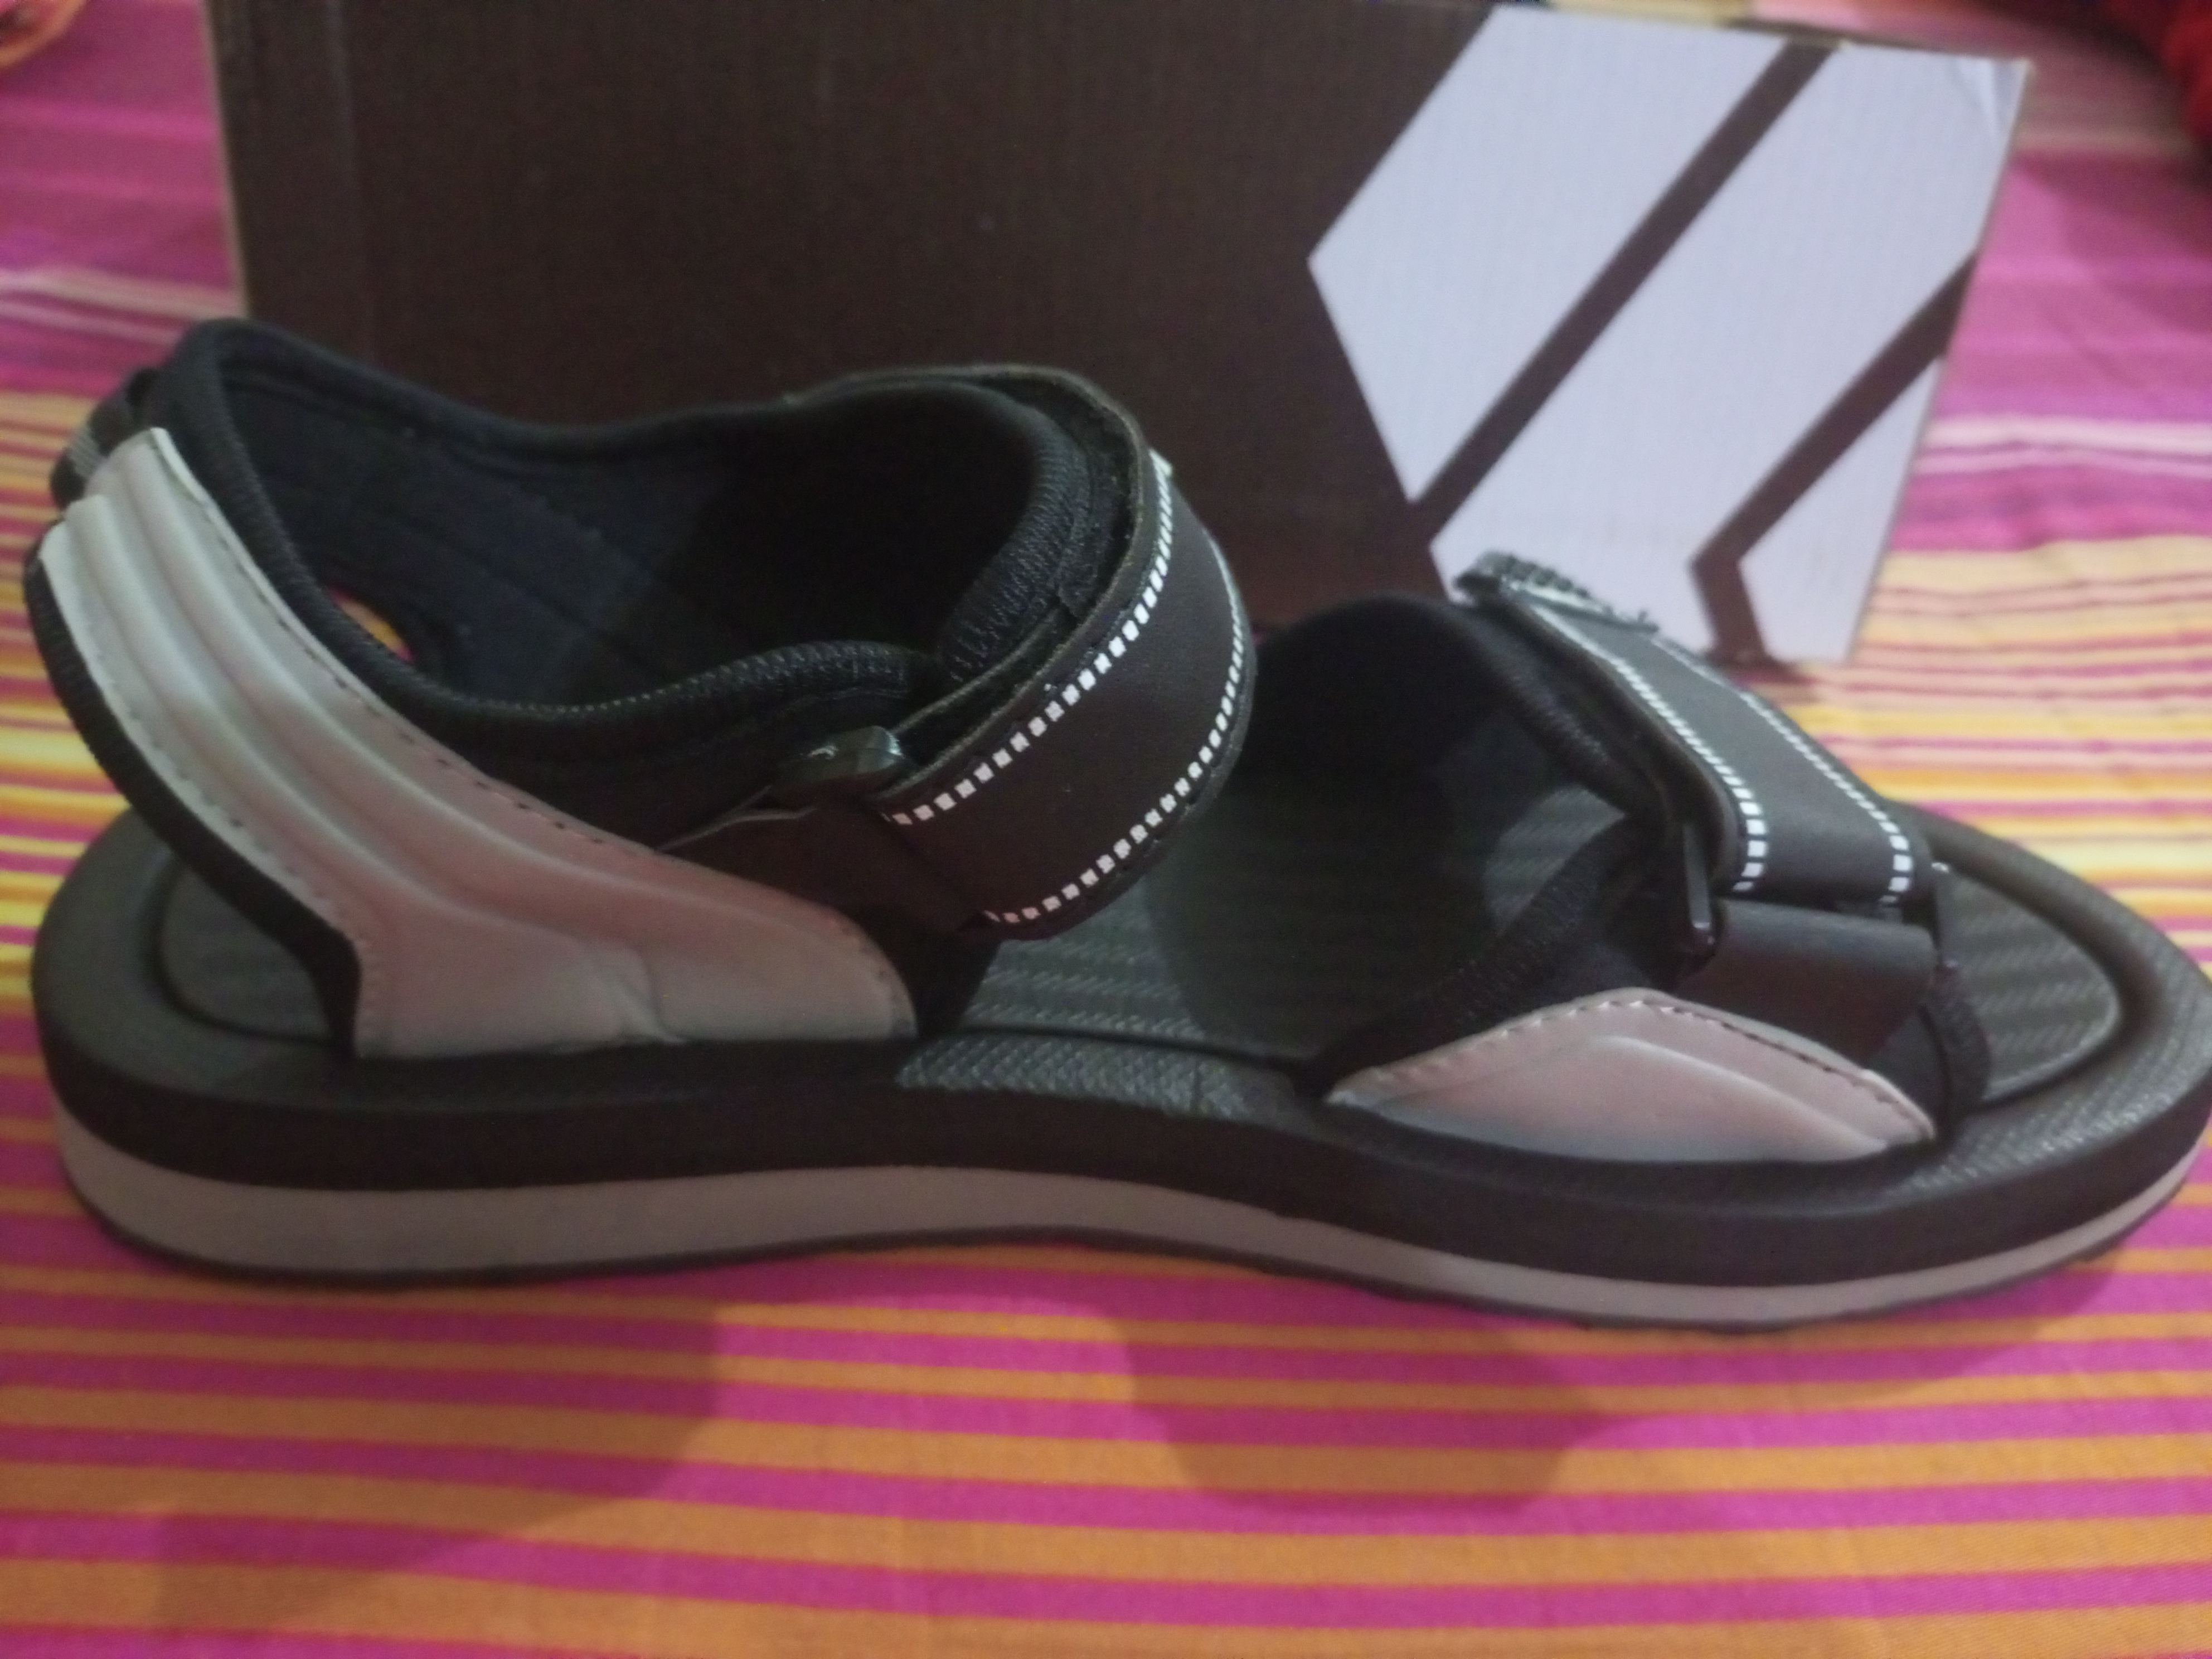 Kito sandals 100 % original Cash... - Kito Sandals Pakistan | Facebook